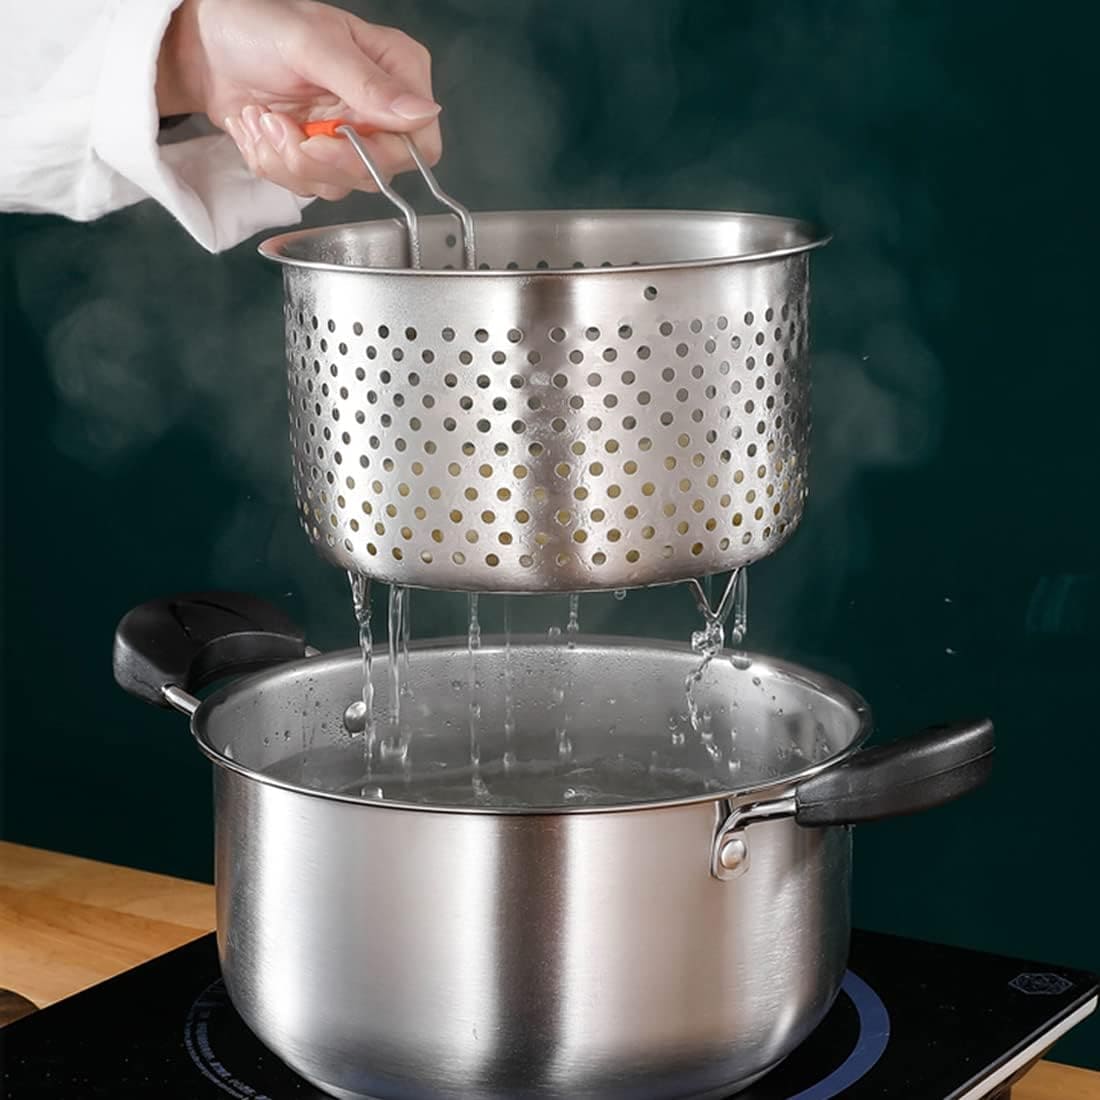 Stainless Steel Cooking Steamer With Handle, Kitchen Pot Pressure Cooker, Anti-scald Steamer Basket, Multifunctional Fruit Vegetable Washing Basket, Deep Fryer Pot Strainer